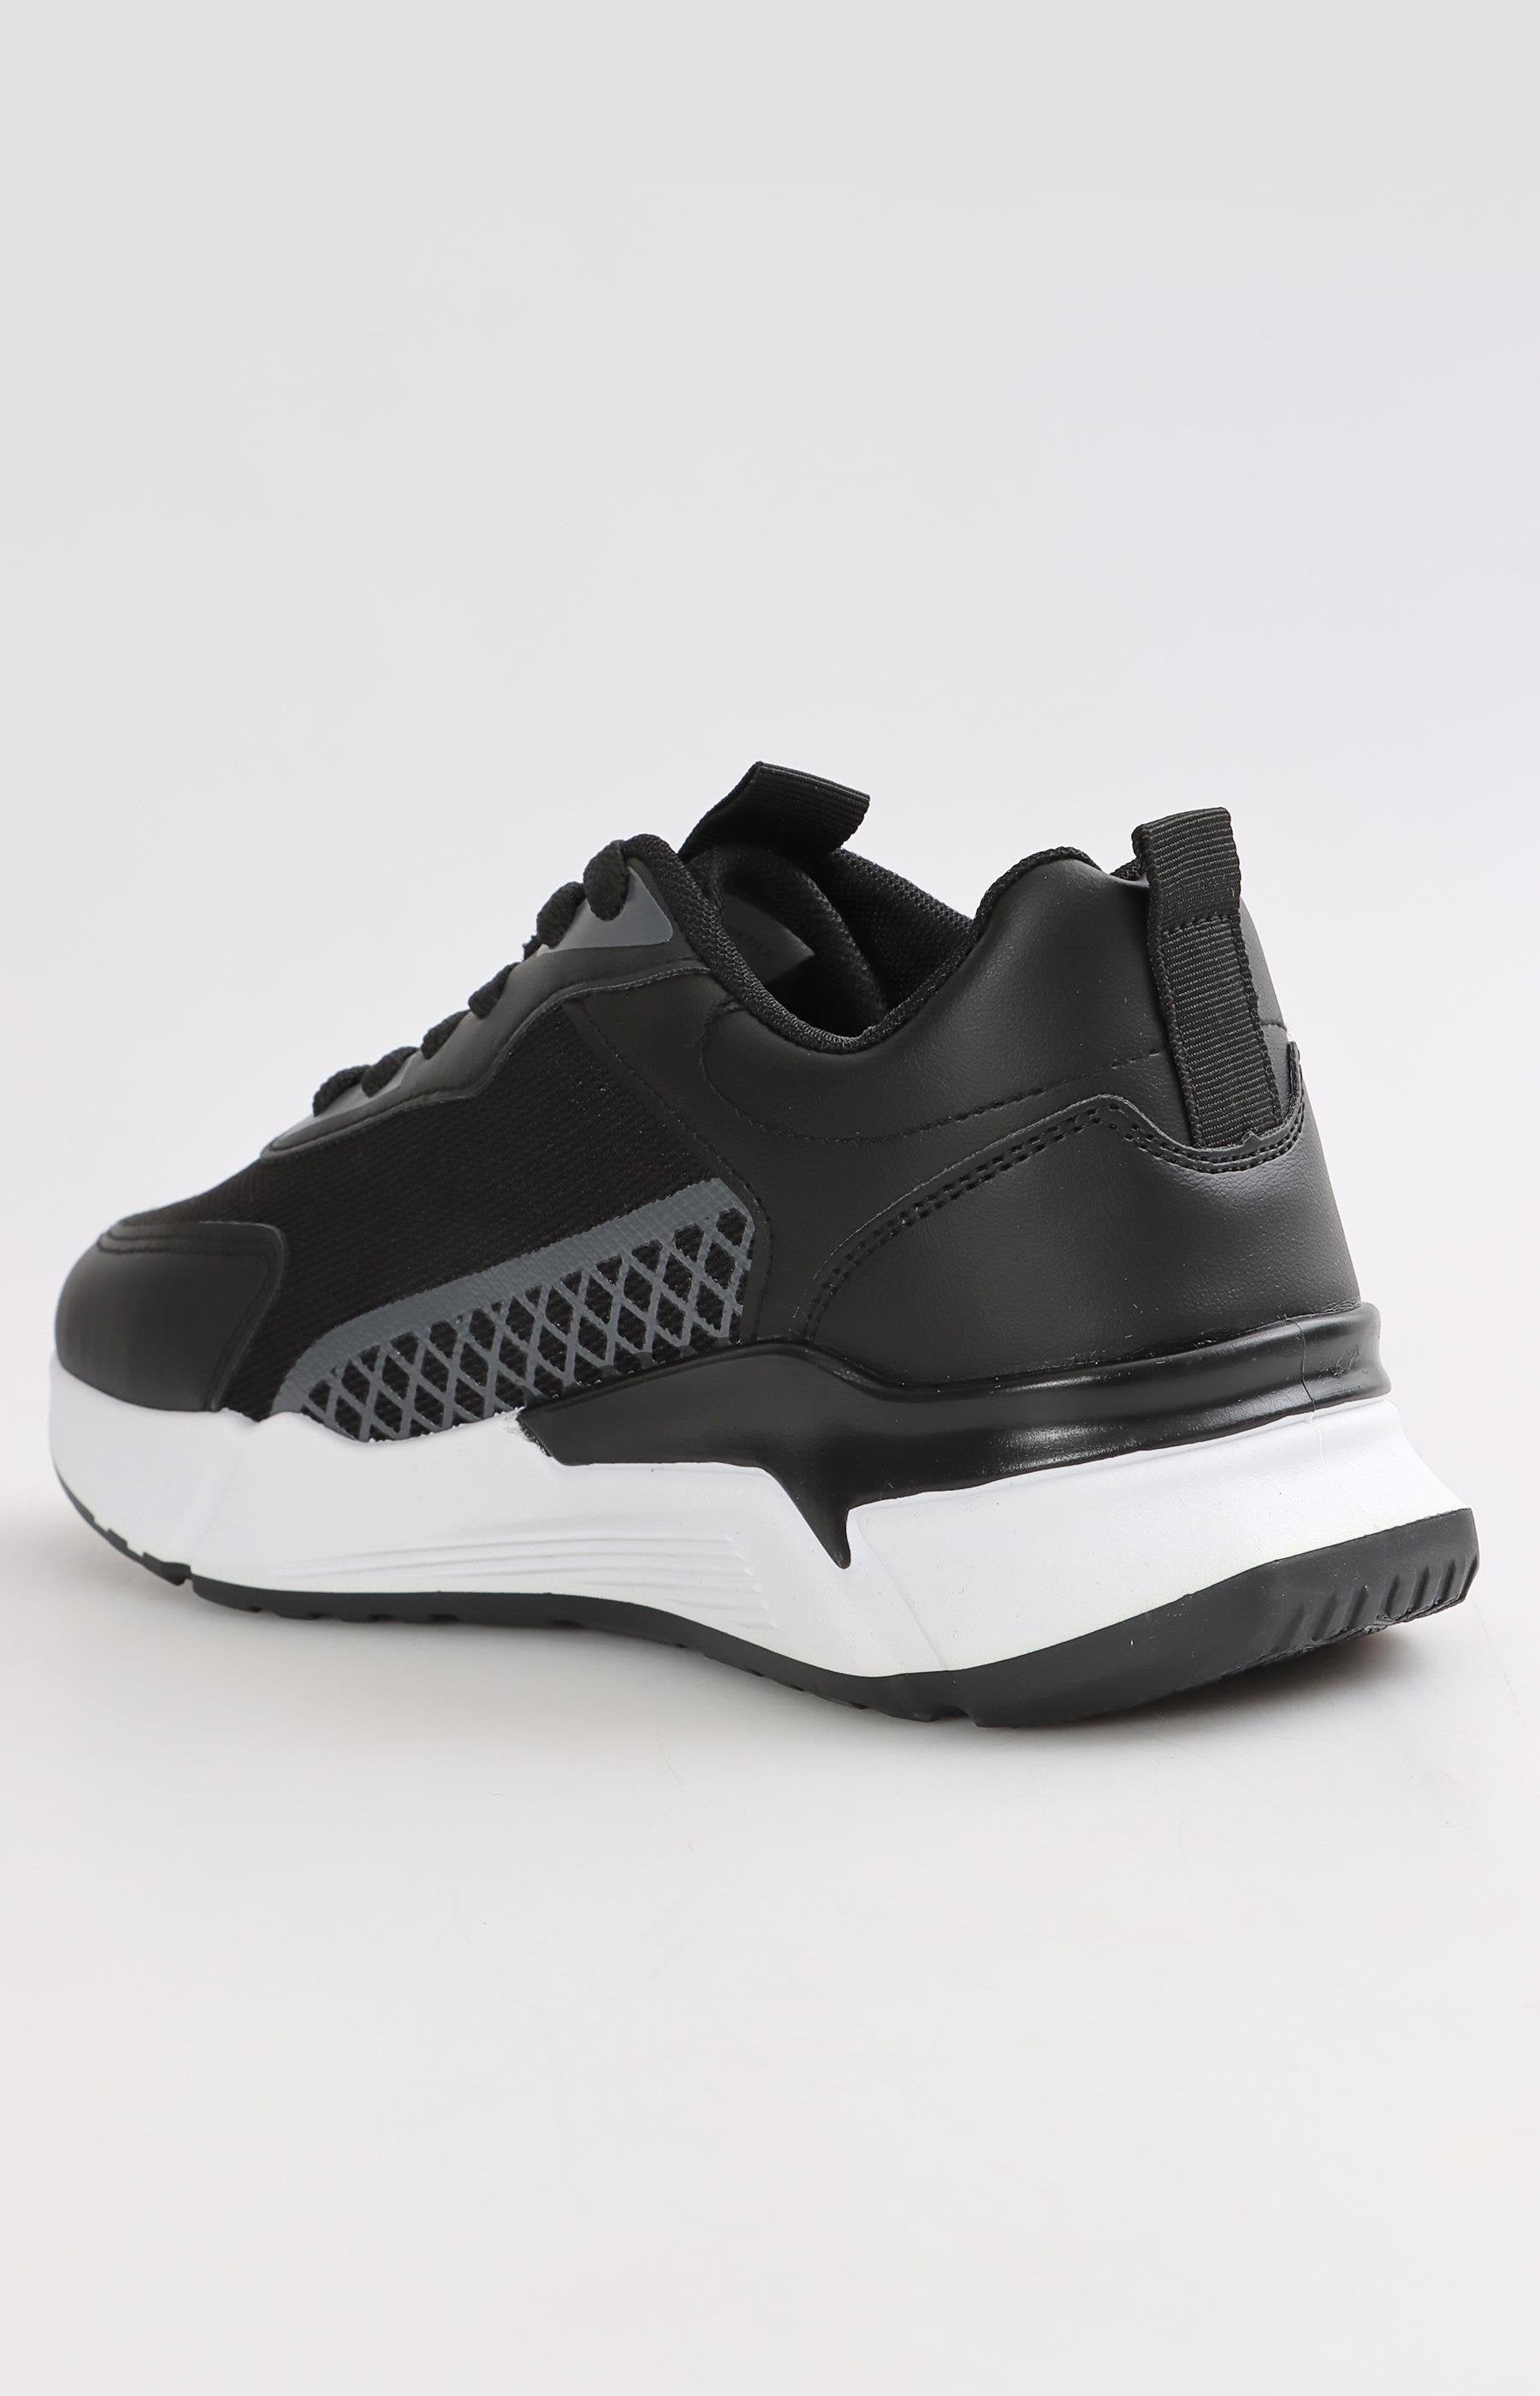 Mens Low Cut Casual Sneakers - Black-Charcoal